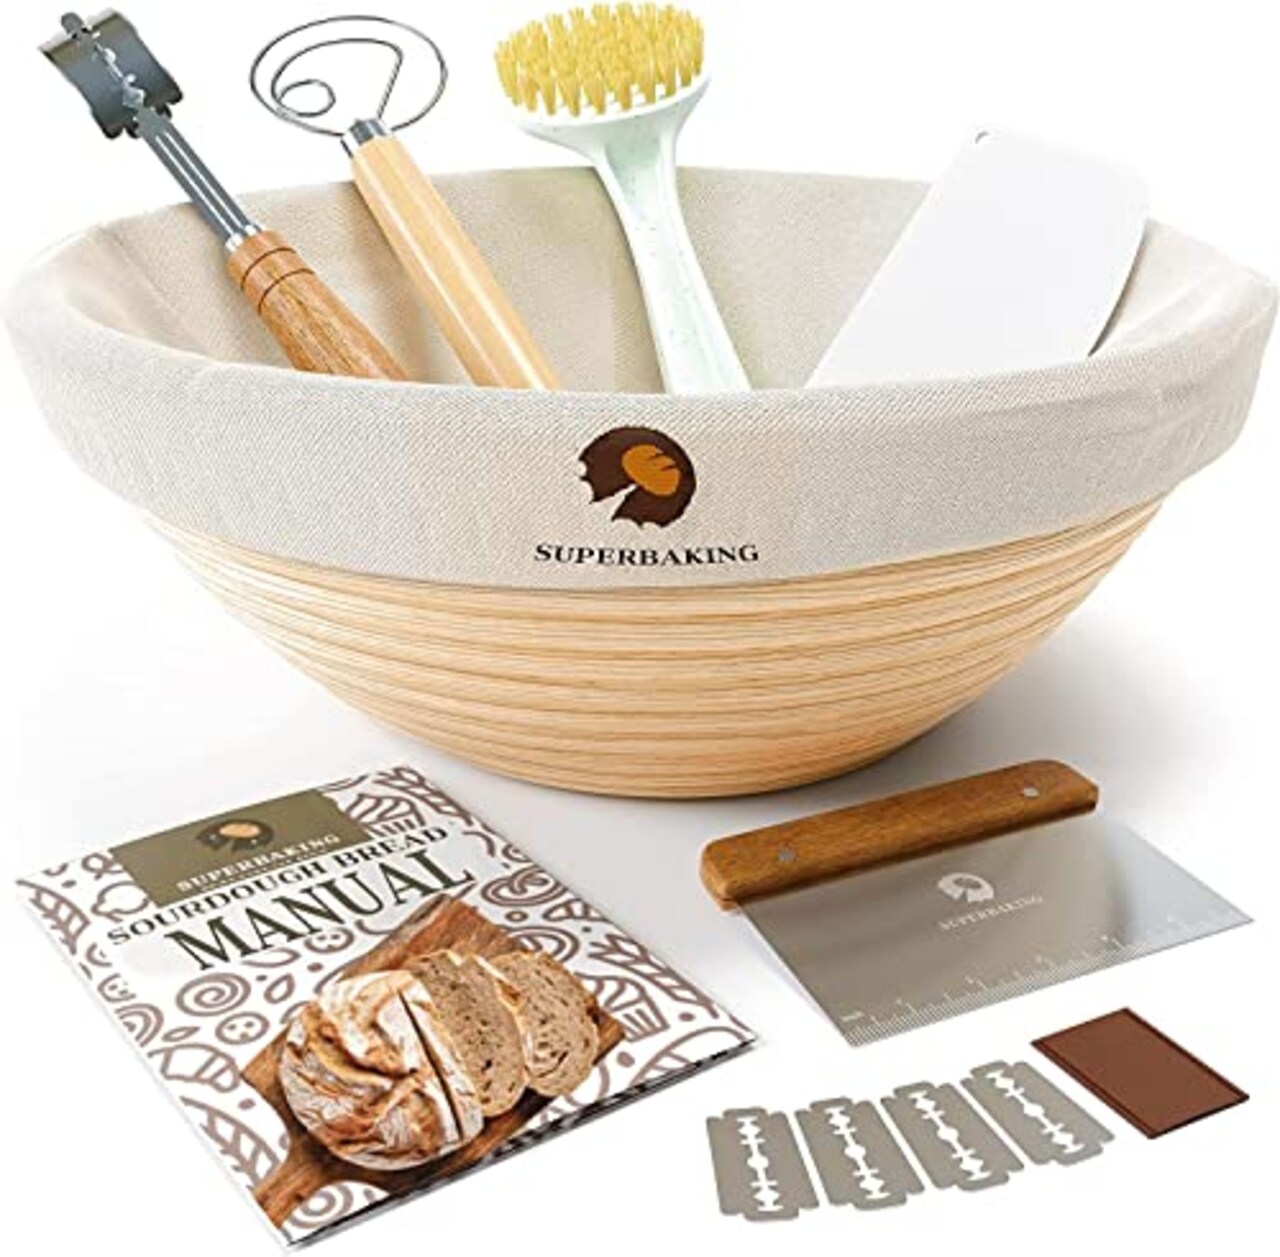 Superbaking Bread Proofing Basket, Round 9 inch Sourdough Starter Kit,  Proofing Basket for Bread baking, Bread Making Supplies Tools, Banneton  Basket Gift Set